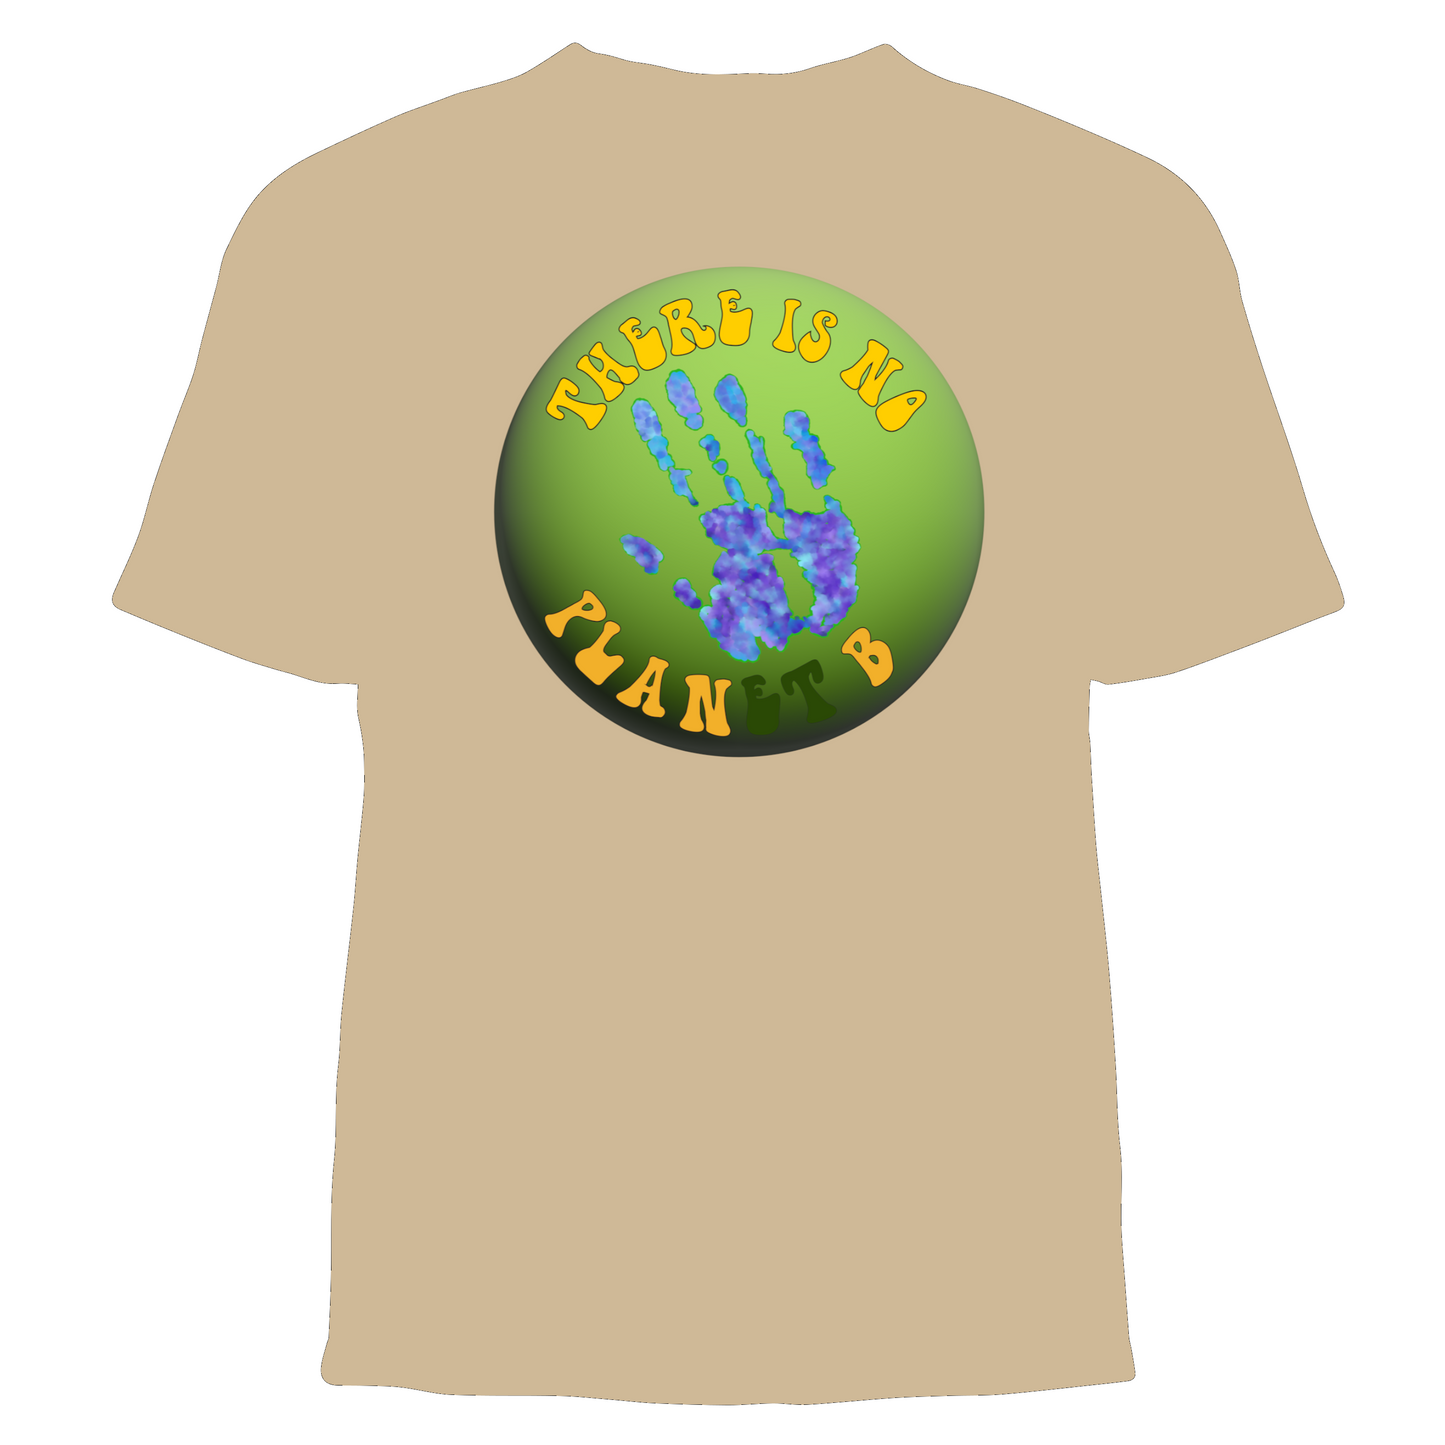 "No Plan(et) B" Tee Shirt Design (Environment, Nature)